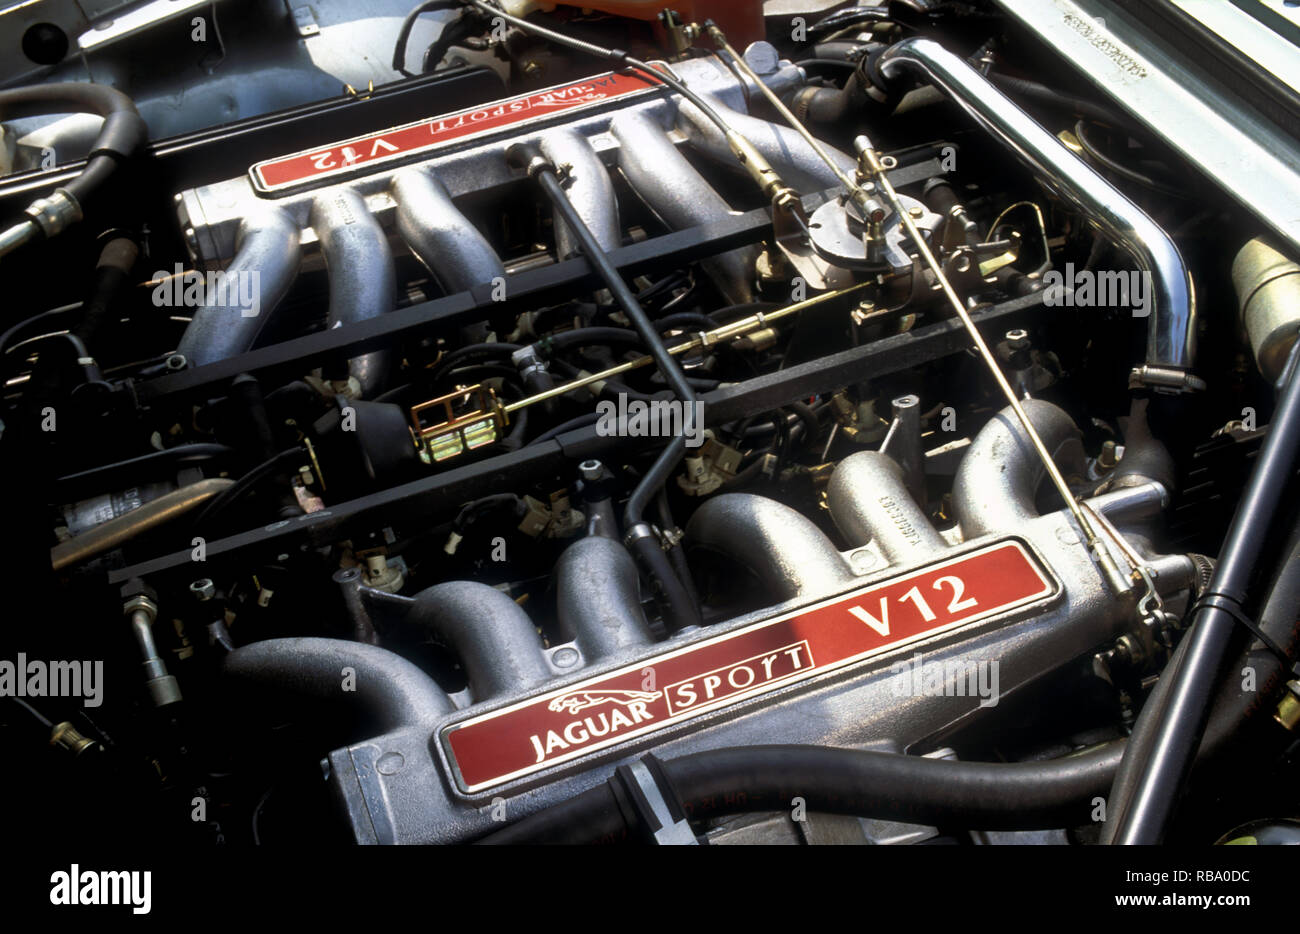 Jaguar Xjs Engine Bay